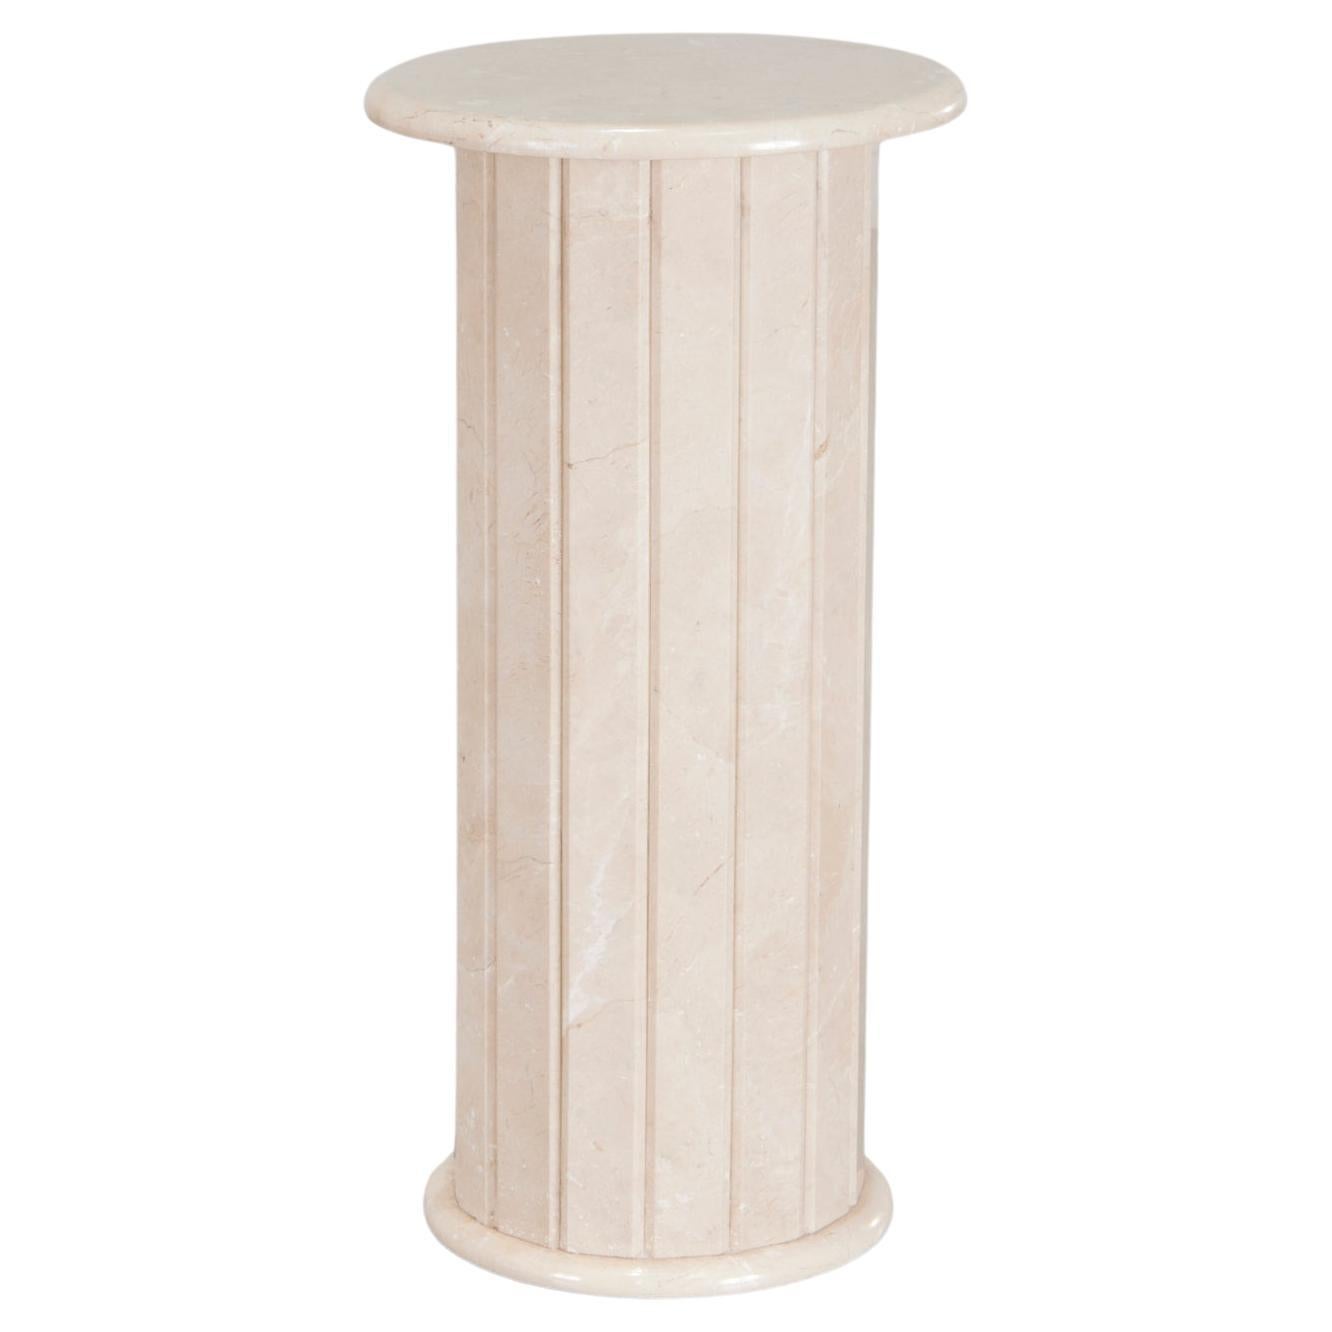 Modern Polished Fluted Travertine Column Pedestal in Soft Pale Earth Tones For Sale